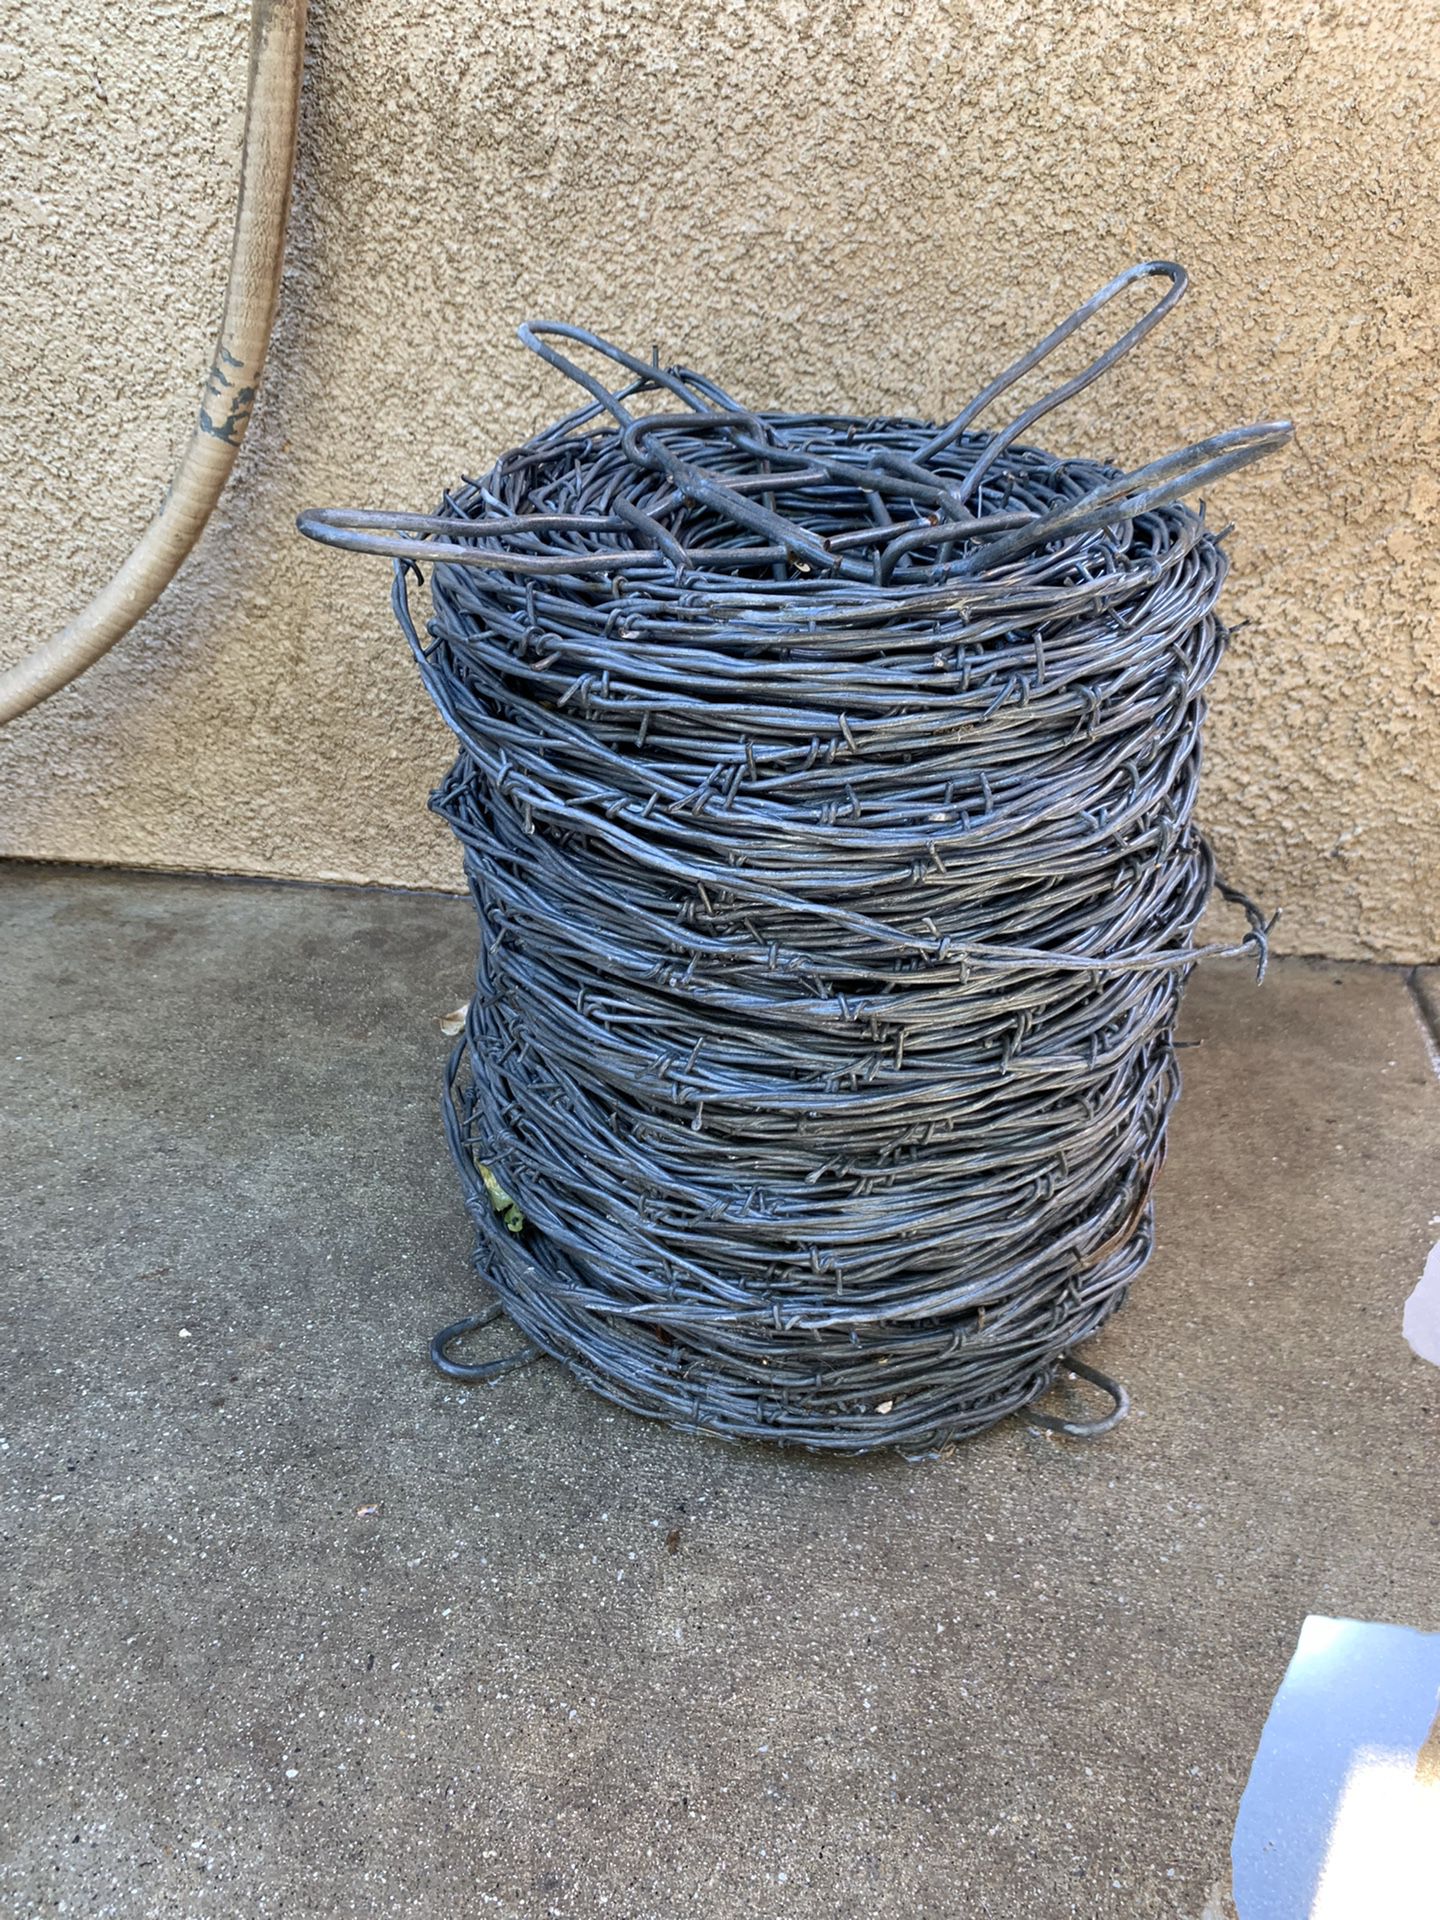 Barbed wire for fence/ alambre de púas